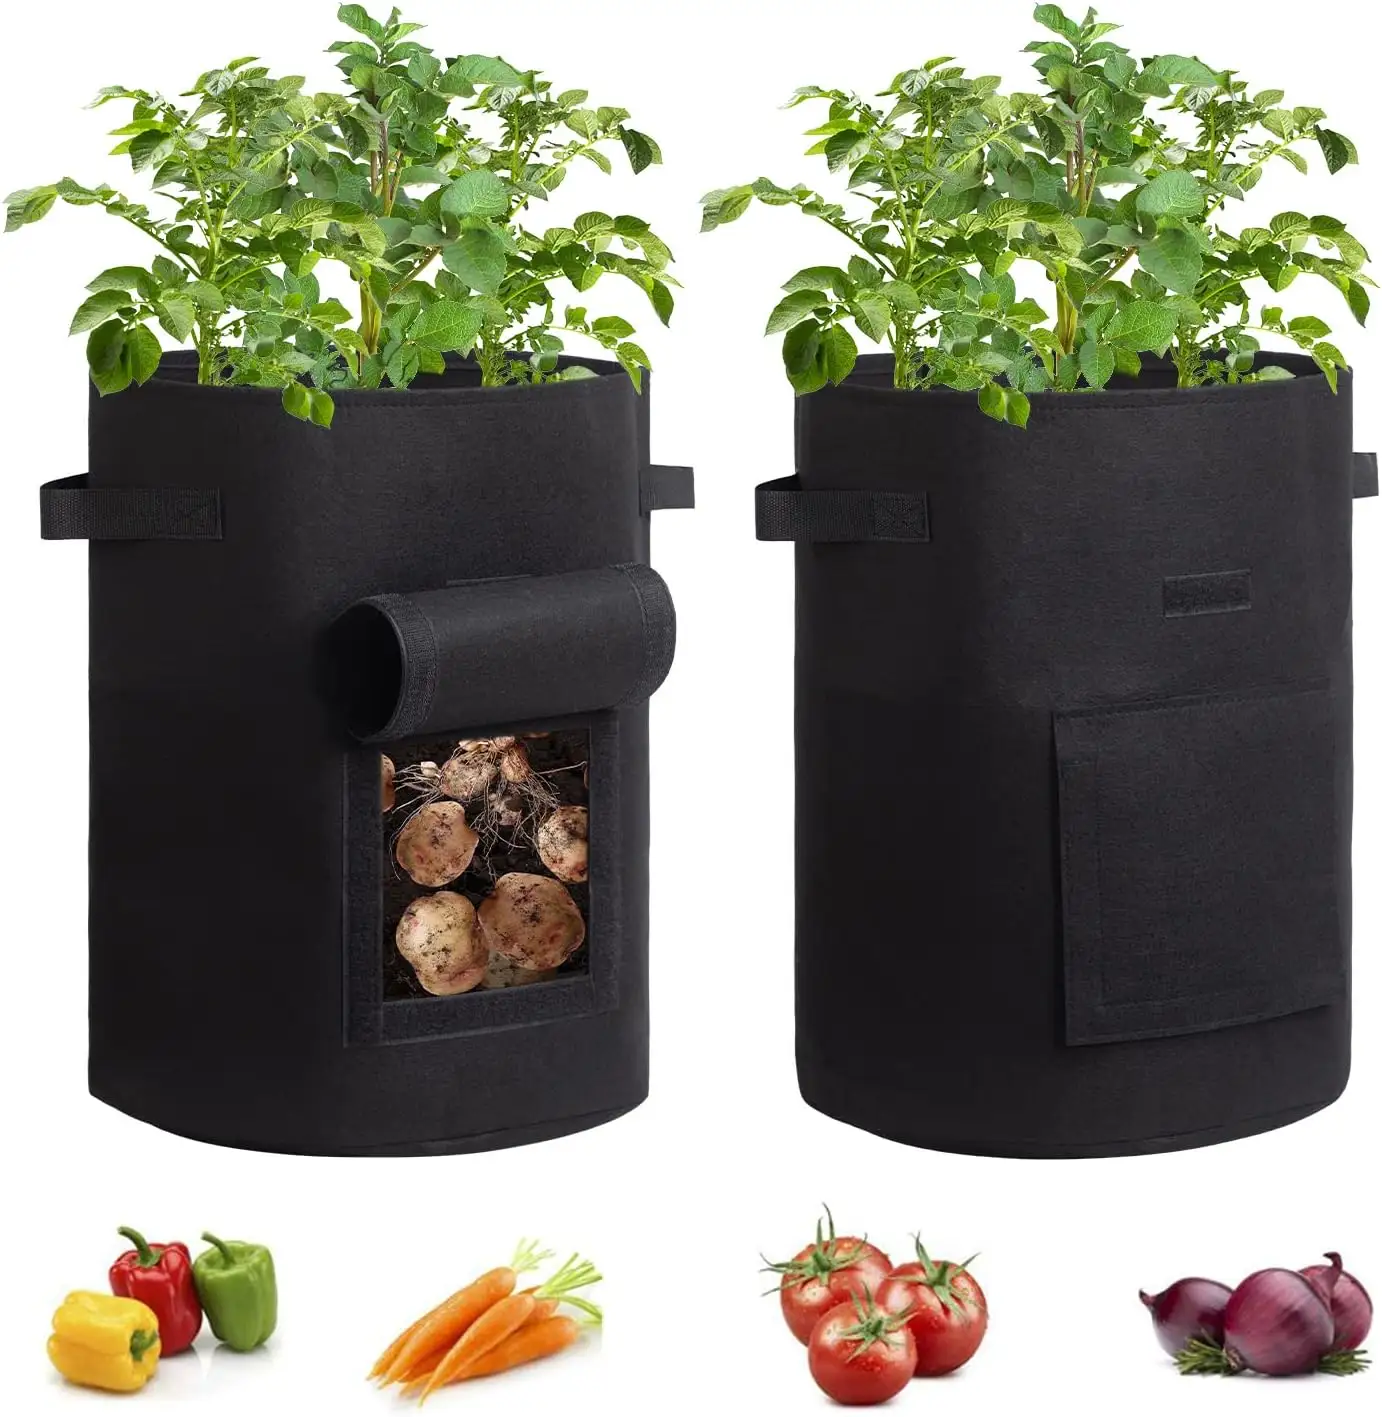 Hot Sale 5 7 10 15 20 Gallon Vegetable/Flower/Plant Felt Grow Bags with Handles